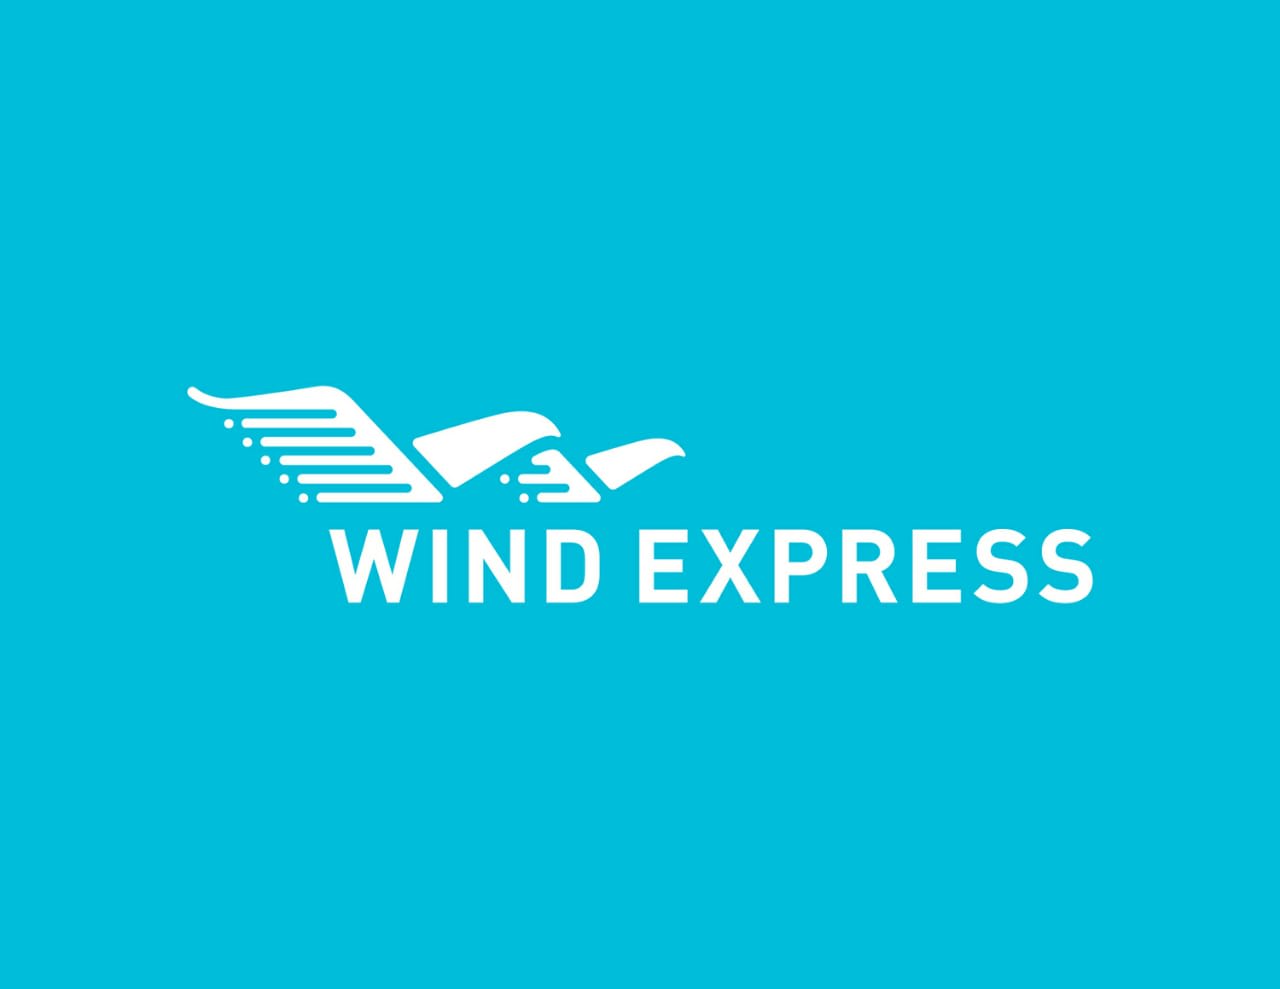 Wind Express Service